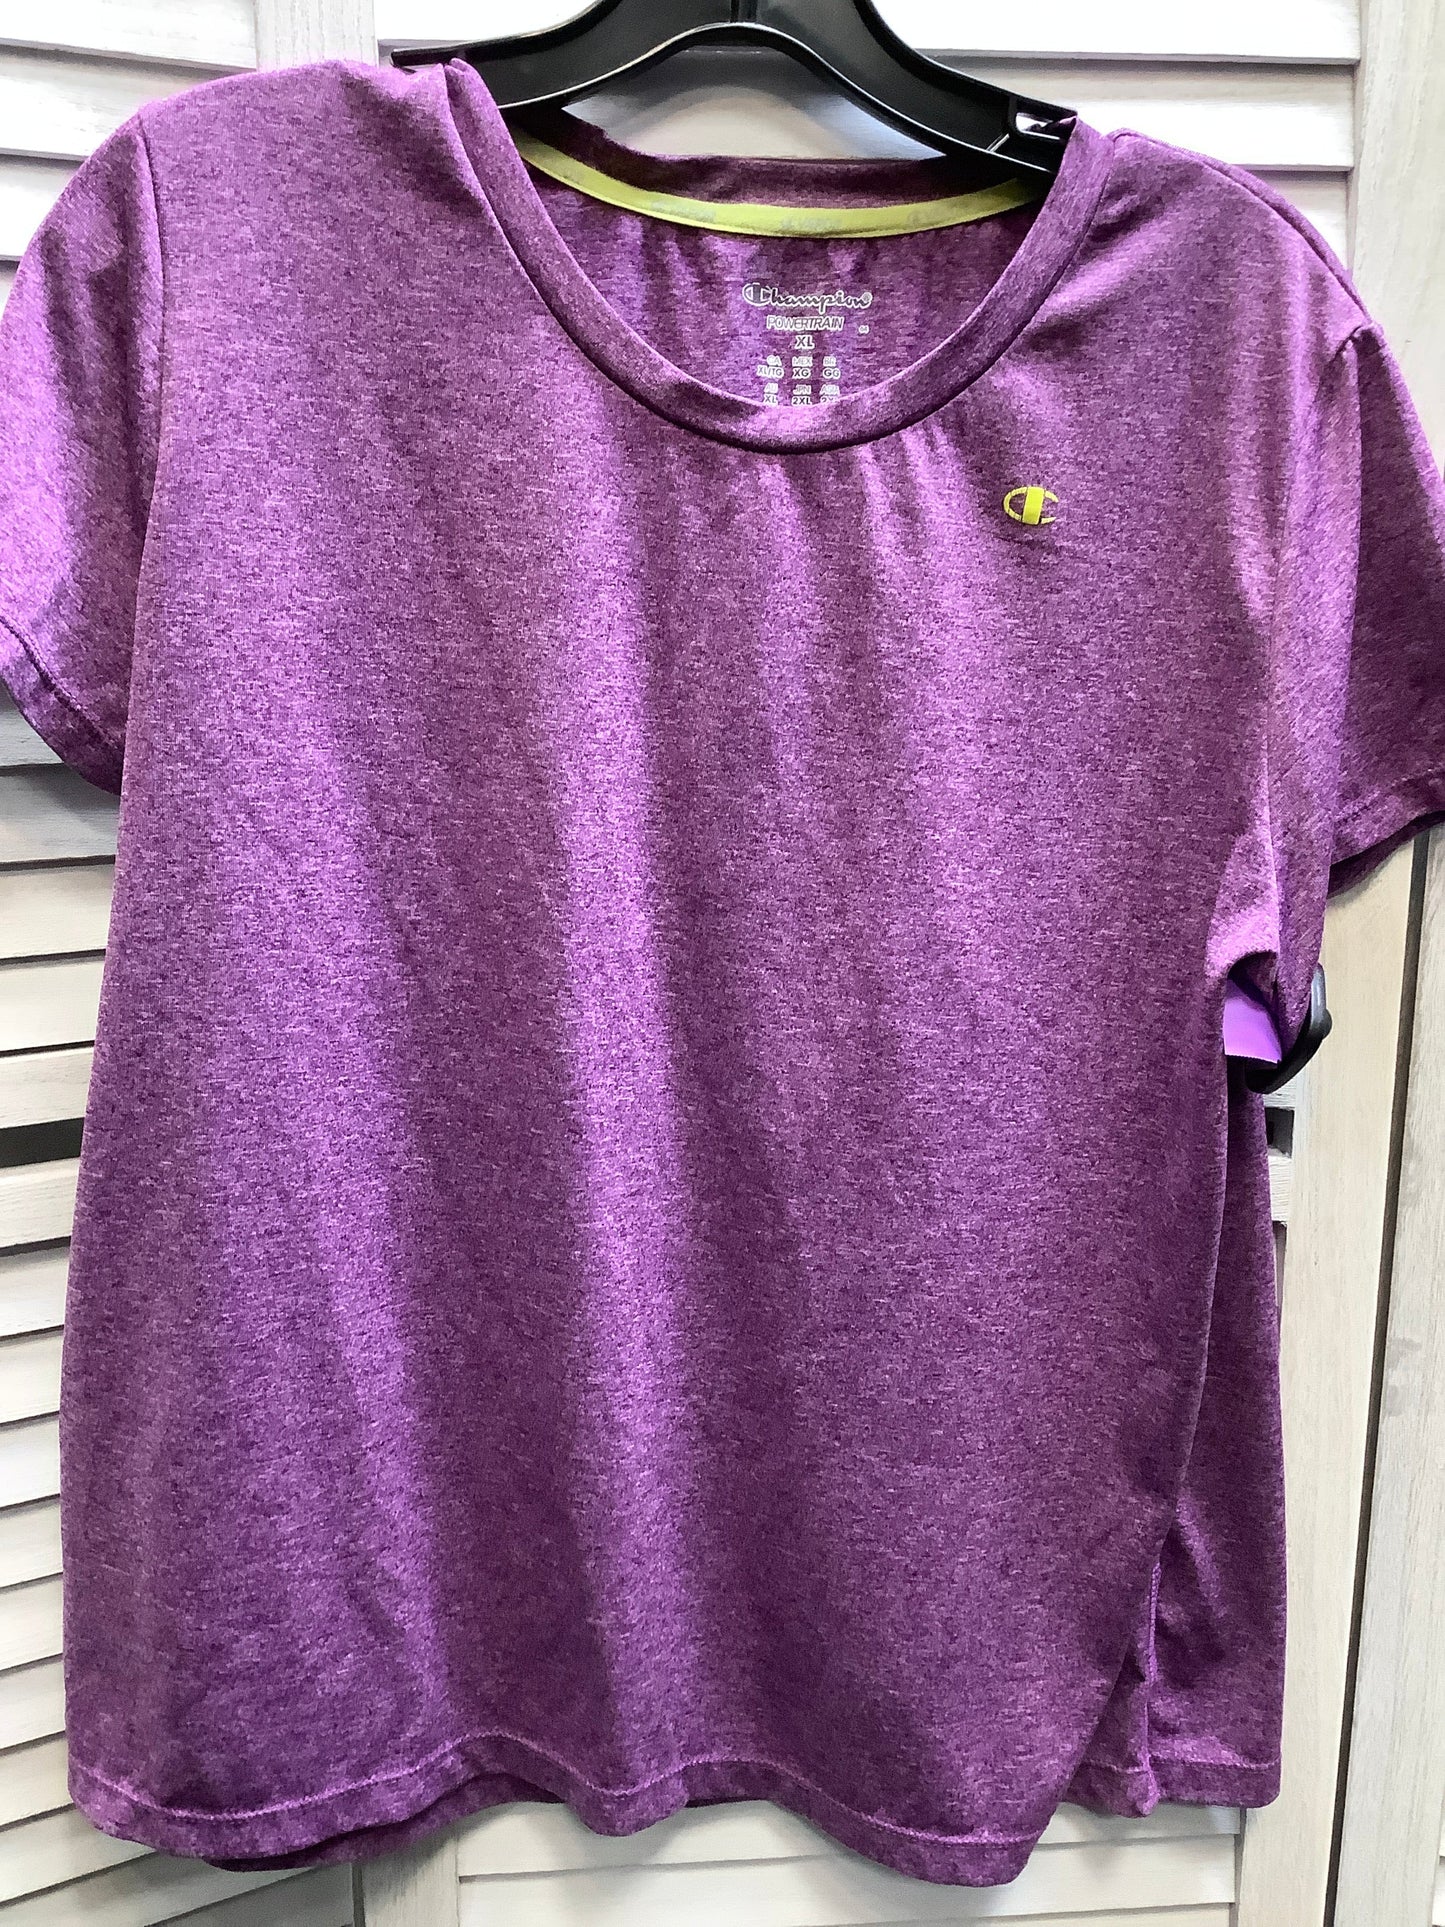 Purple Athletic Top Short Sleeve Champion, Size Xl